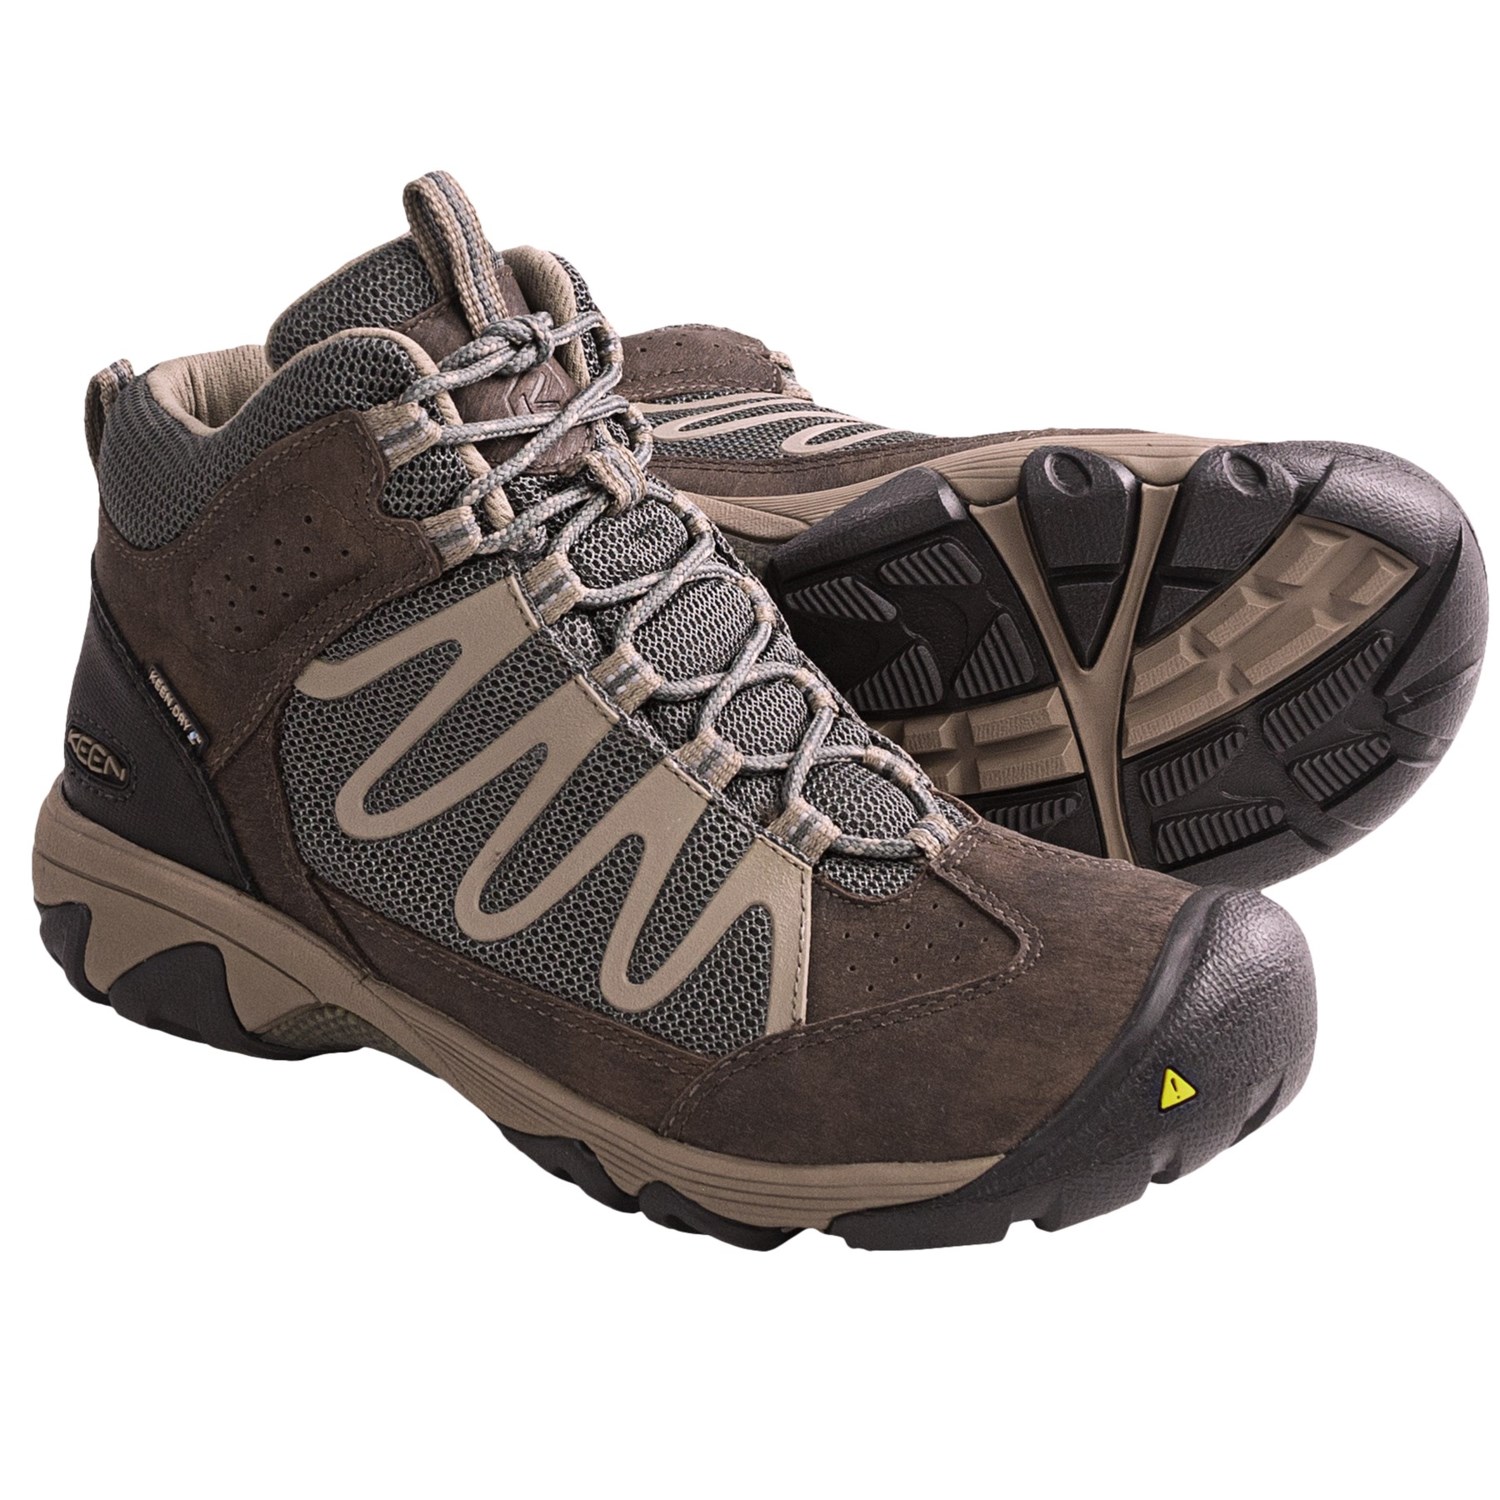 sierra trading post women's hiking boots